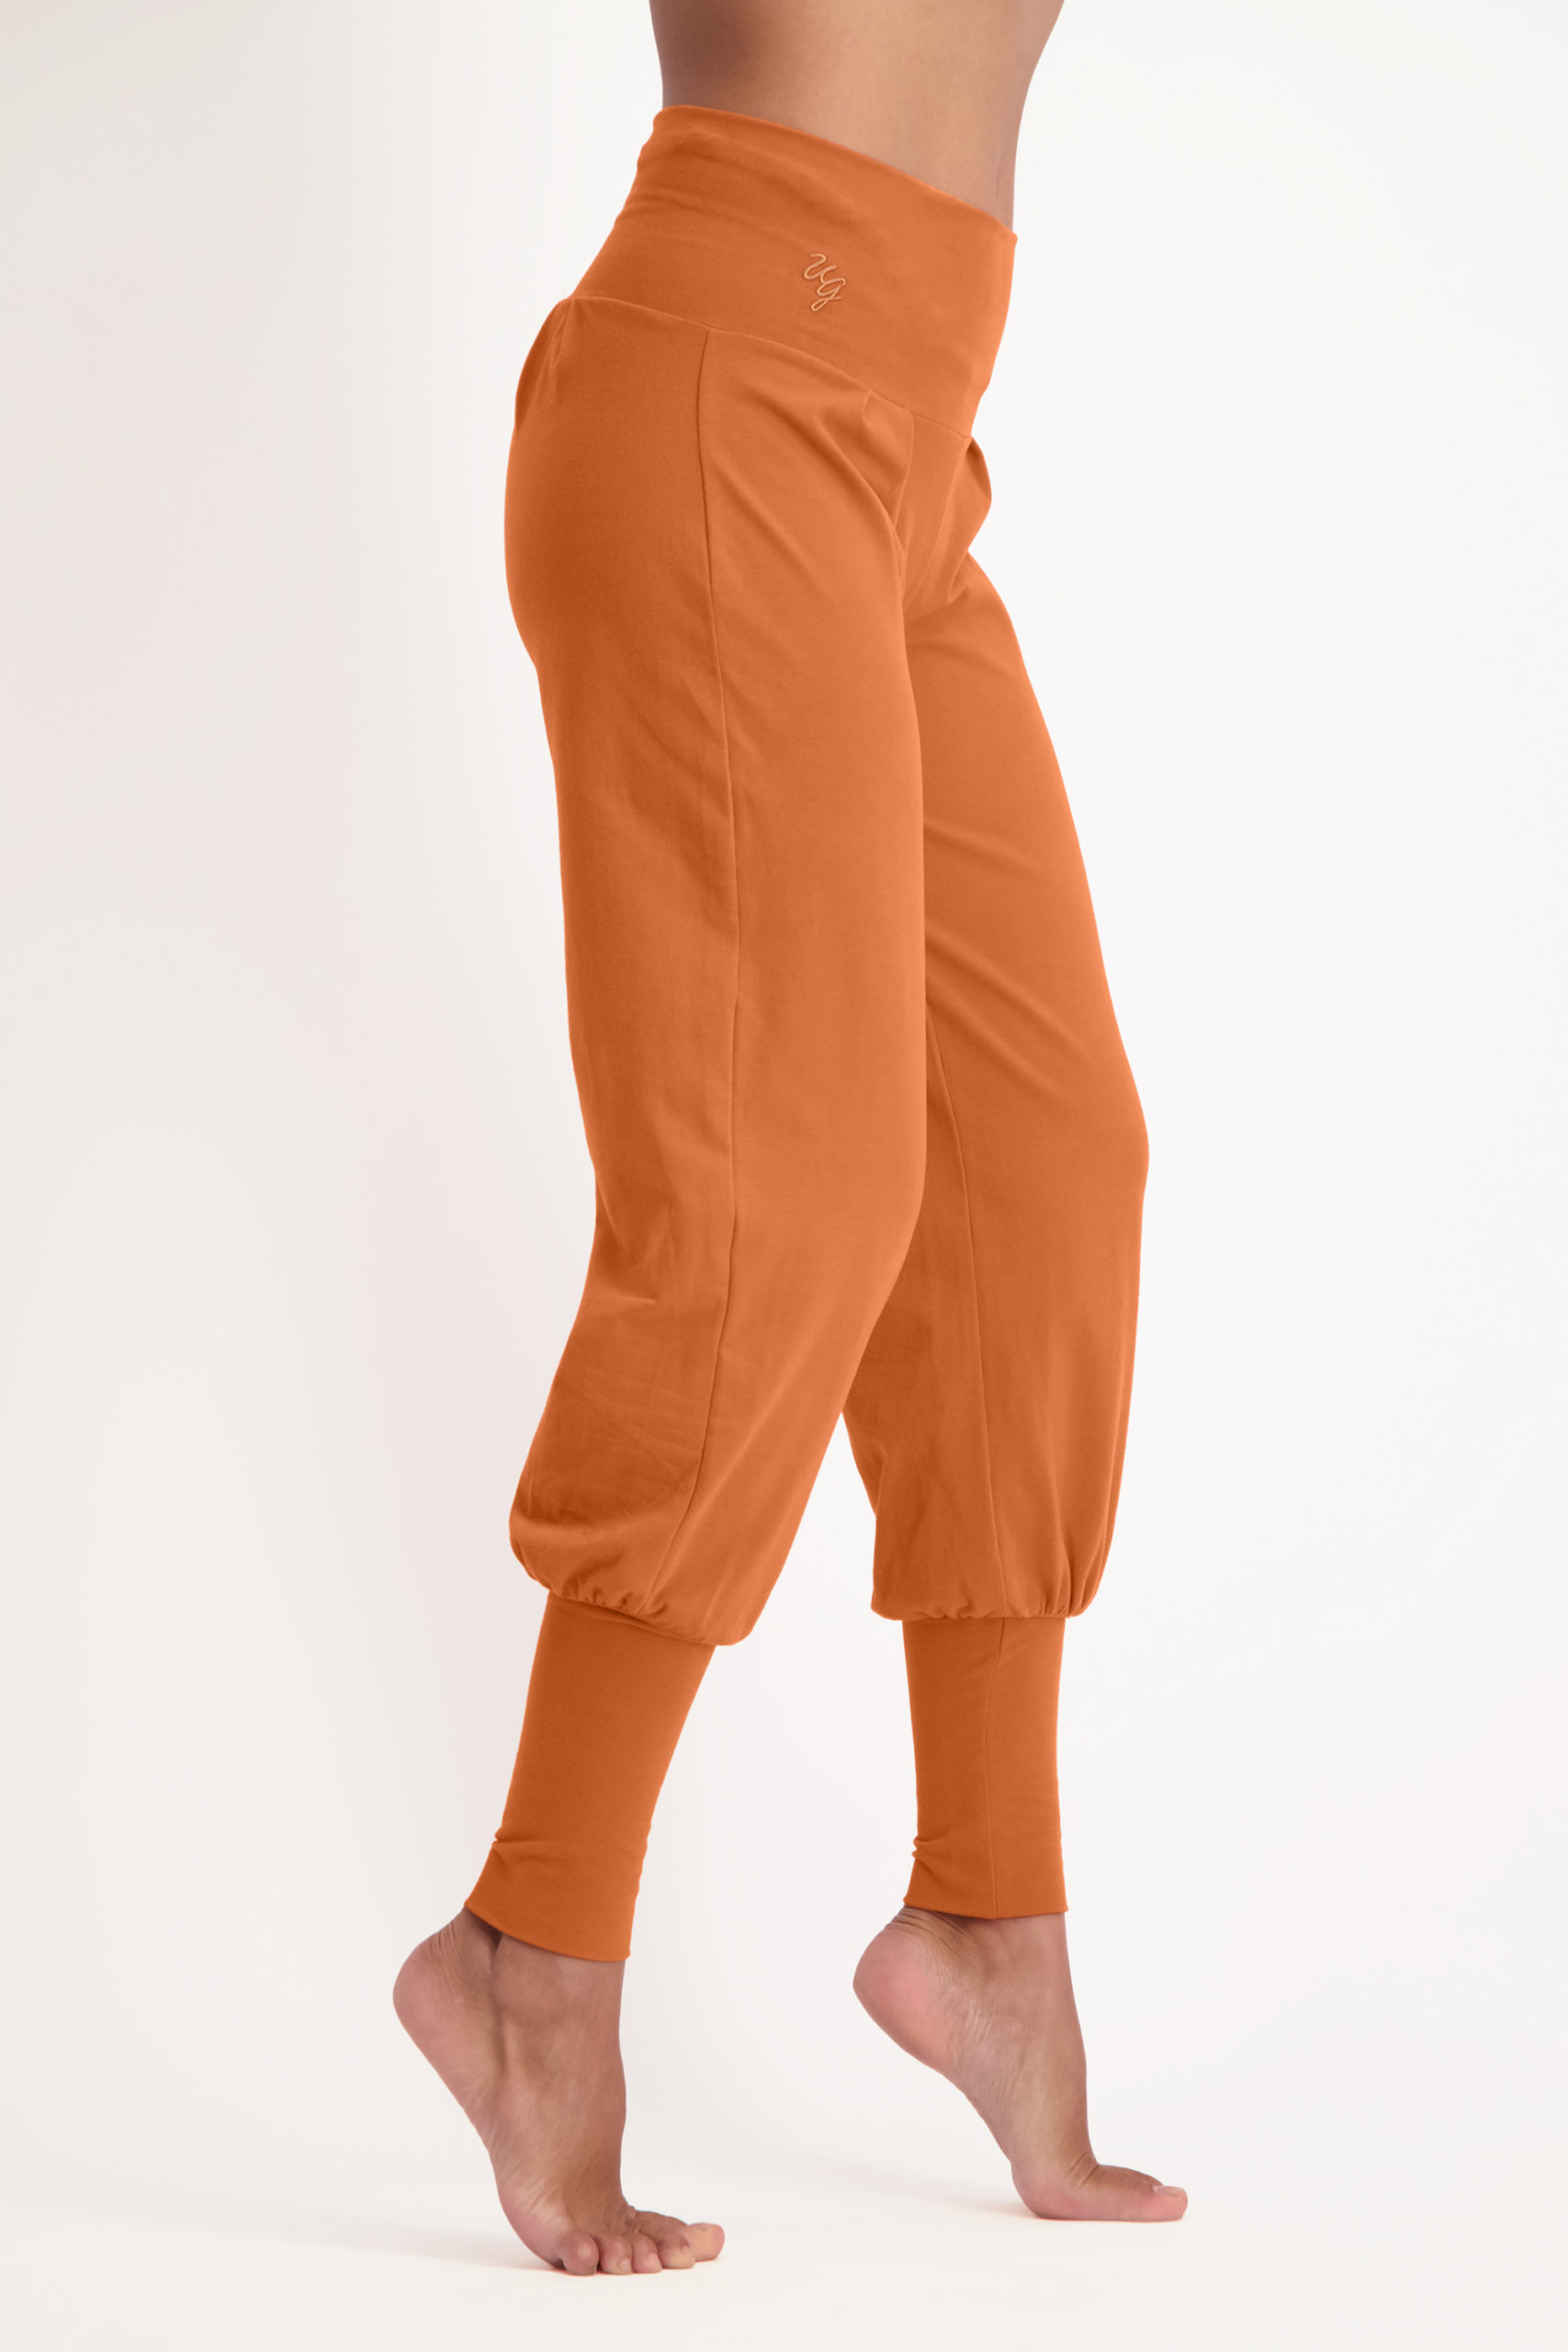 sukha pants-Bombay brown-11345539-side-model_Fullbody_TIFF_3